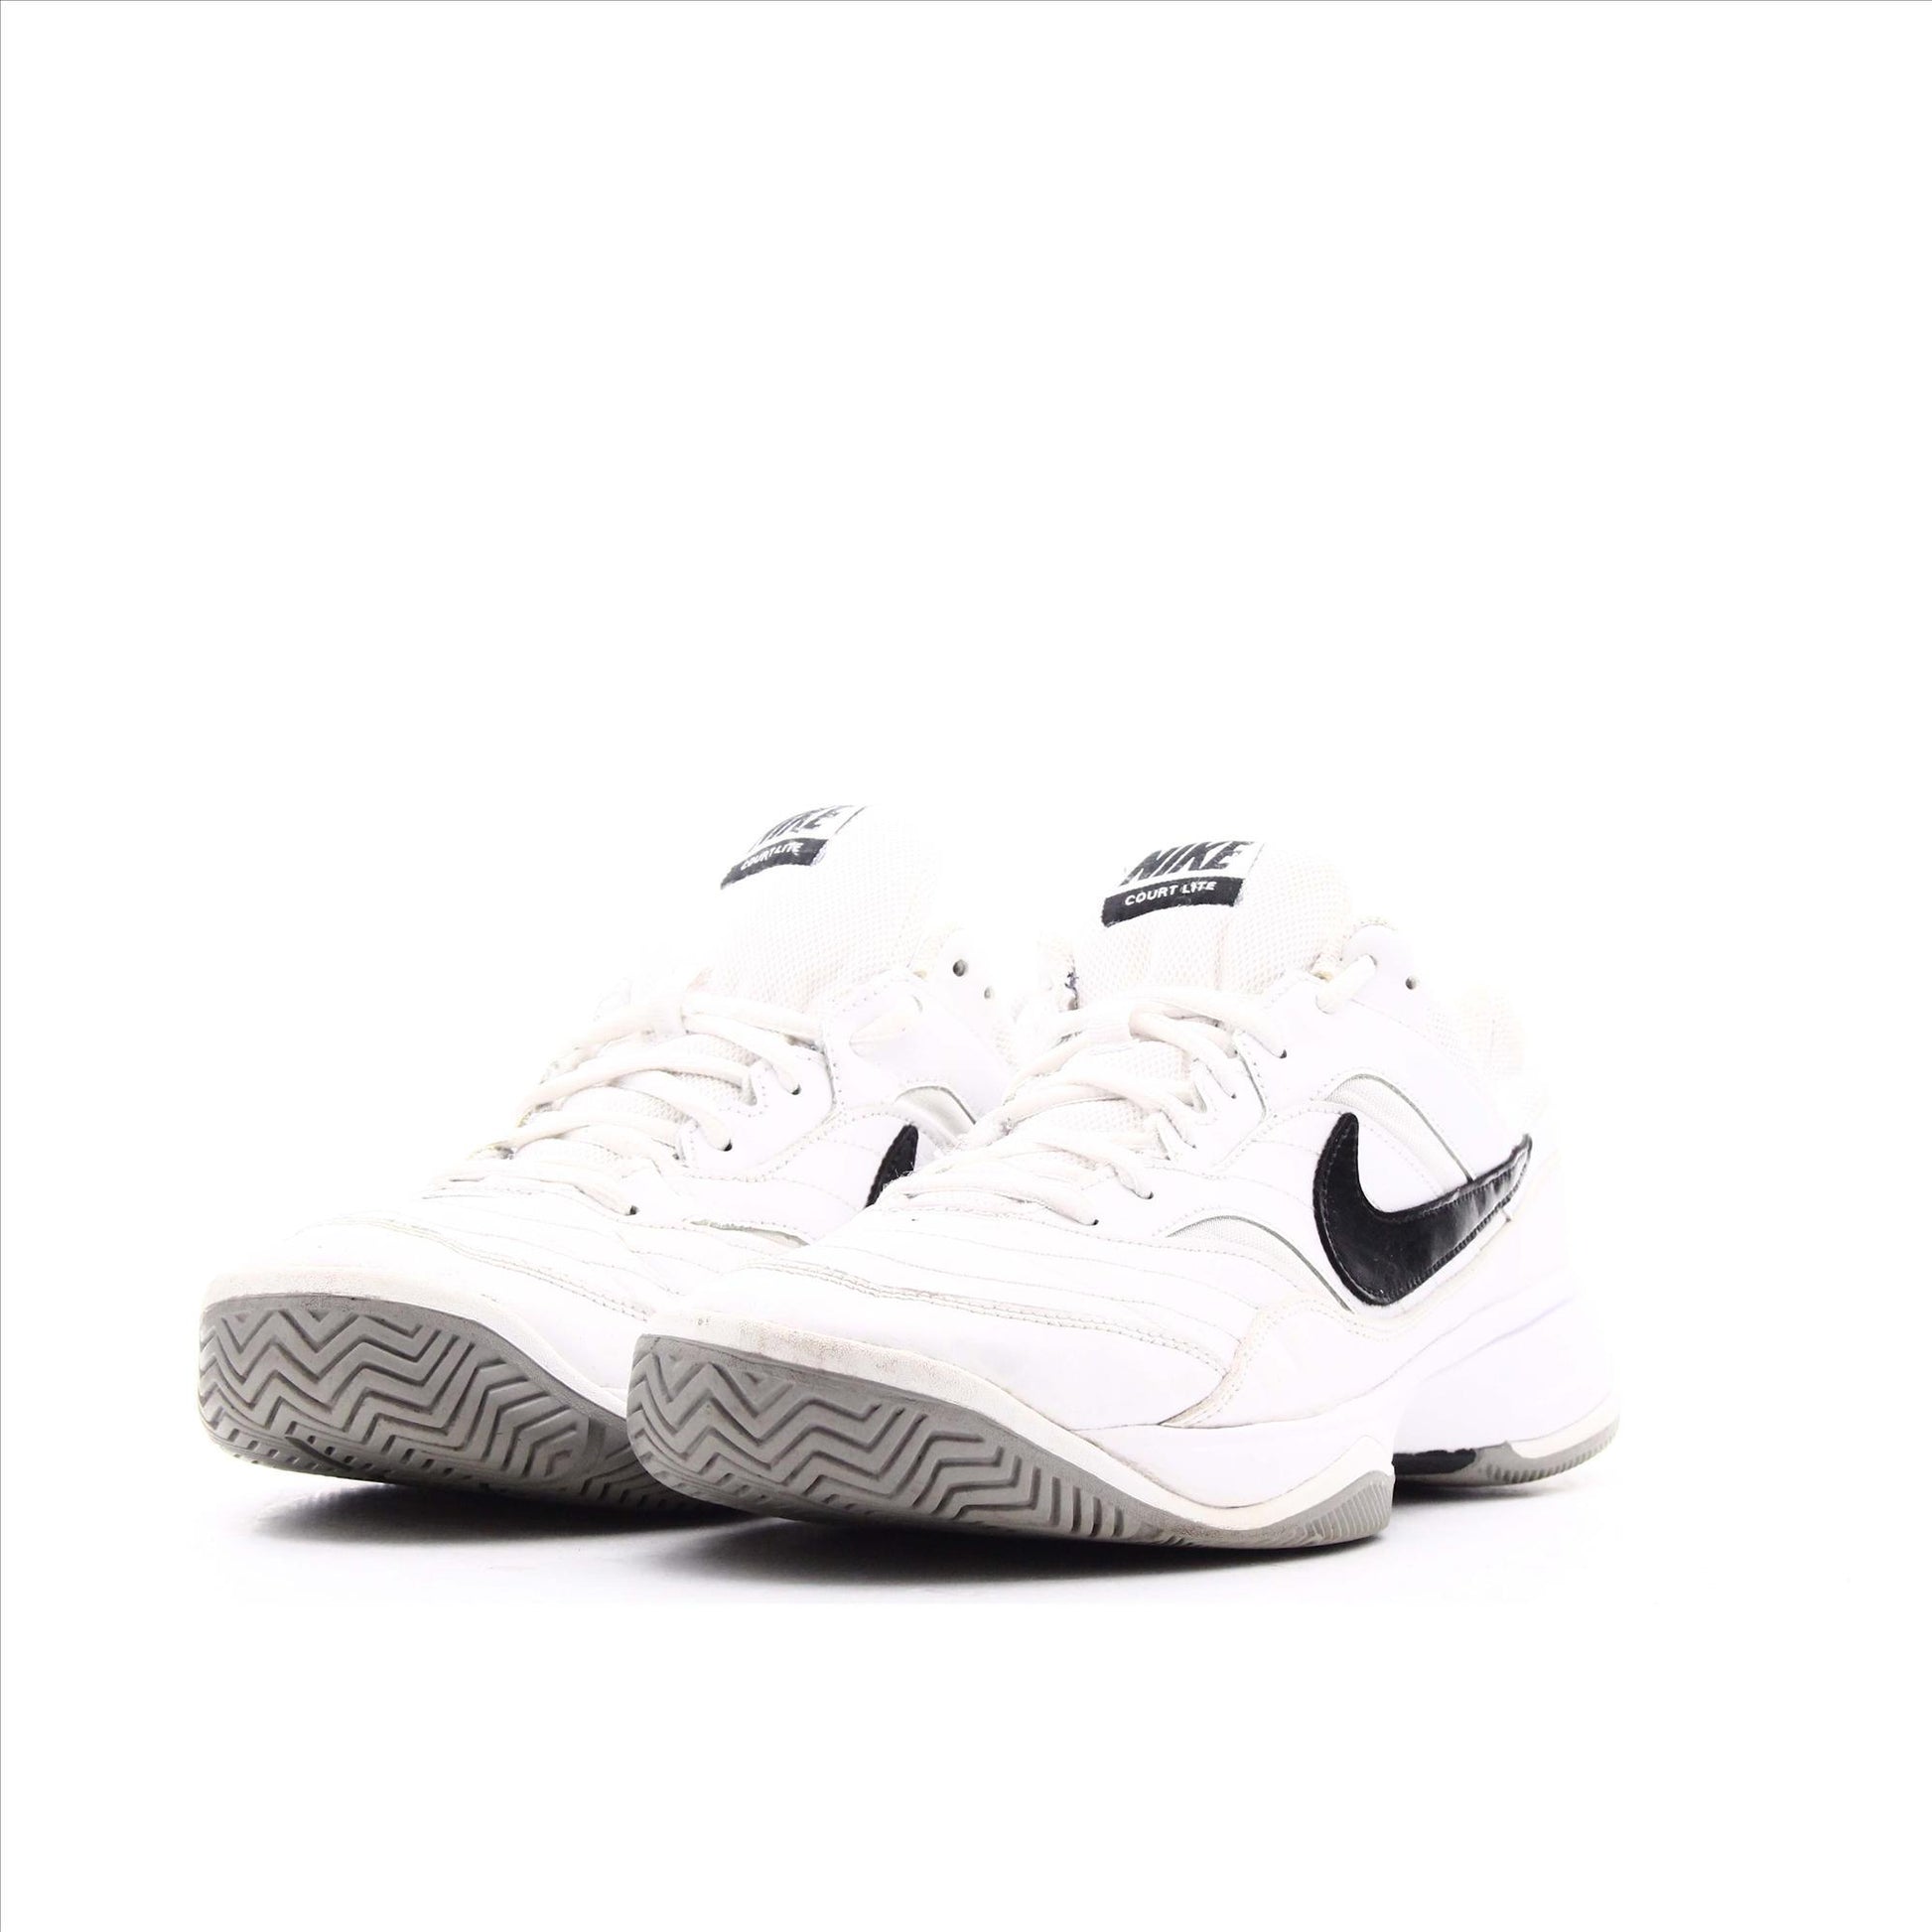 Nike Court Lite